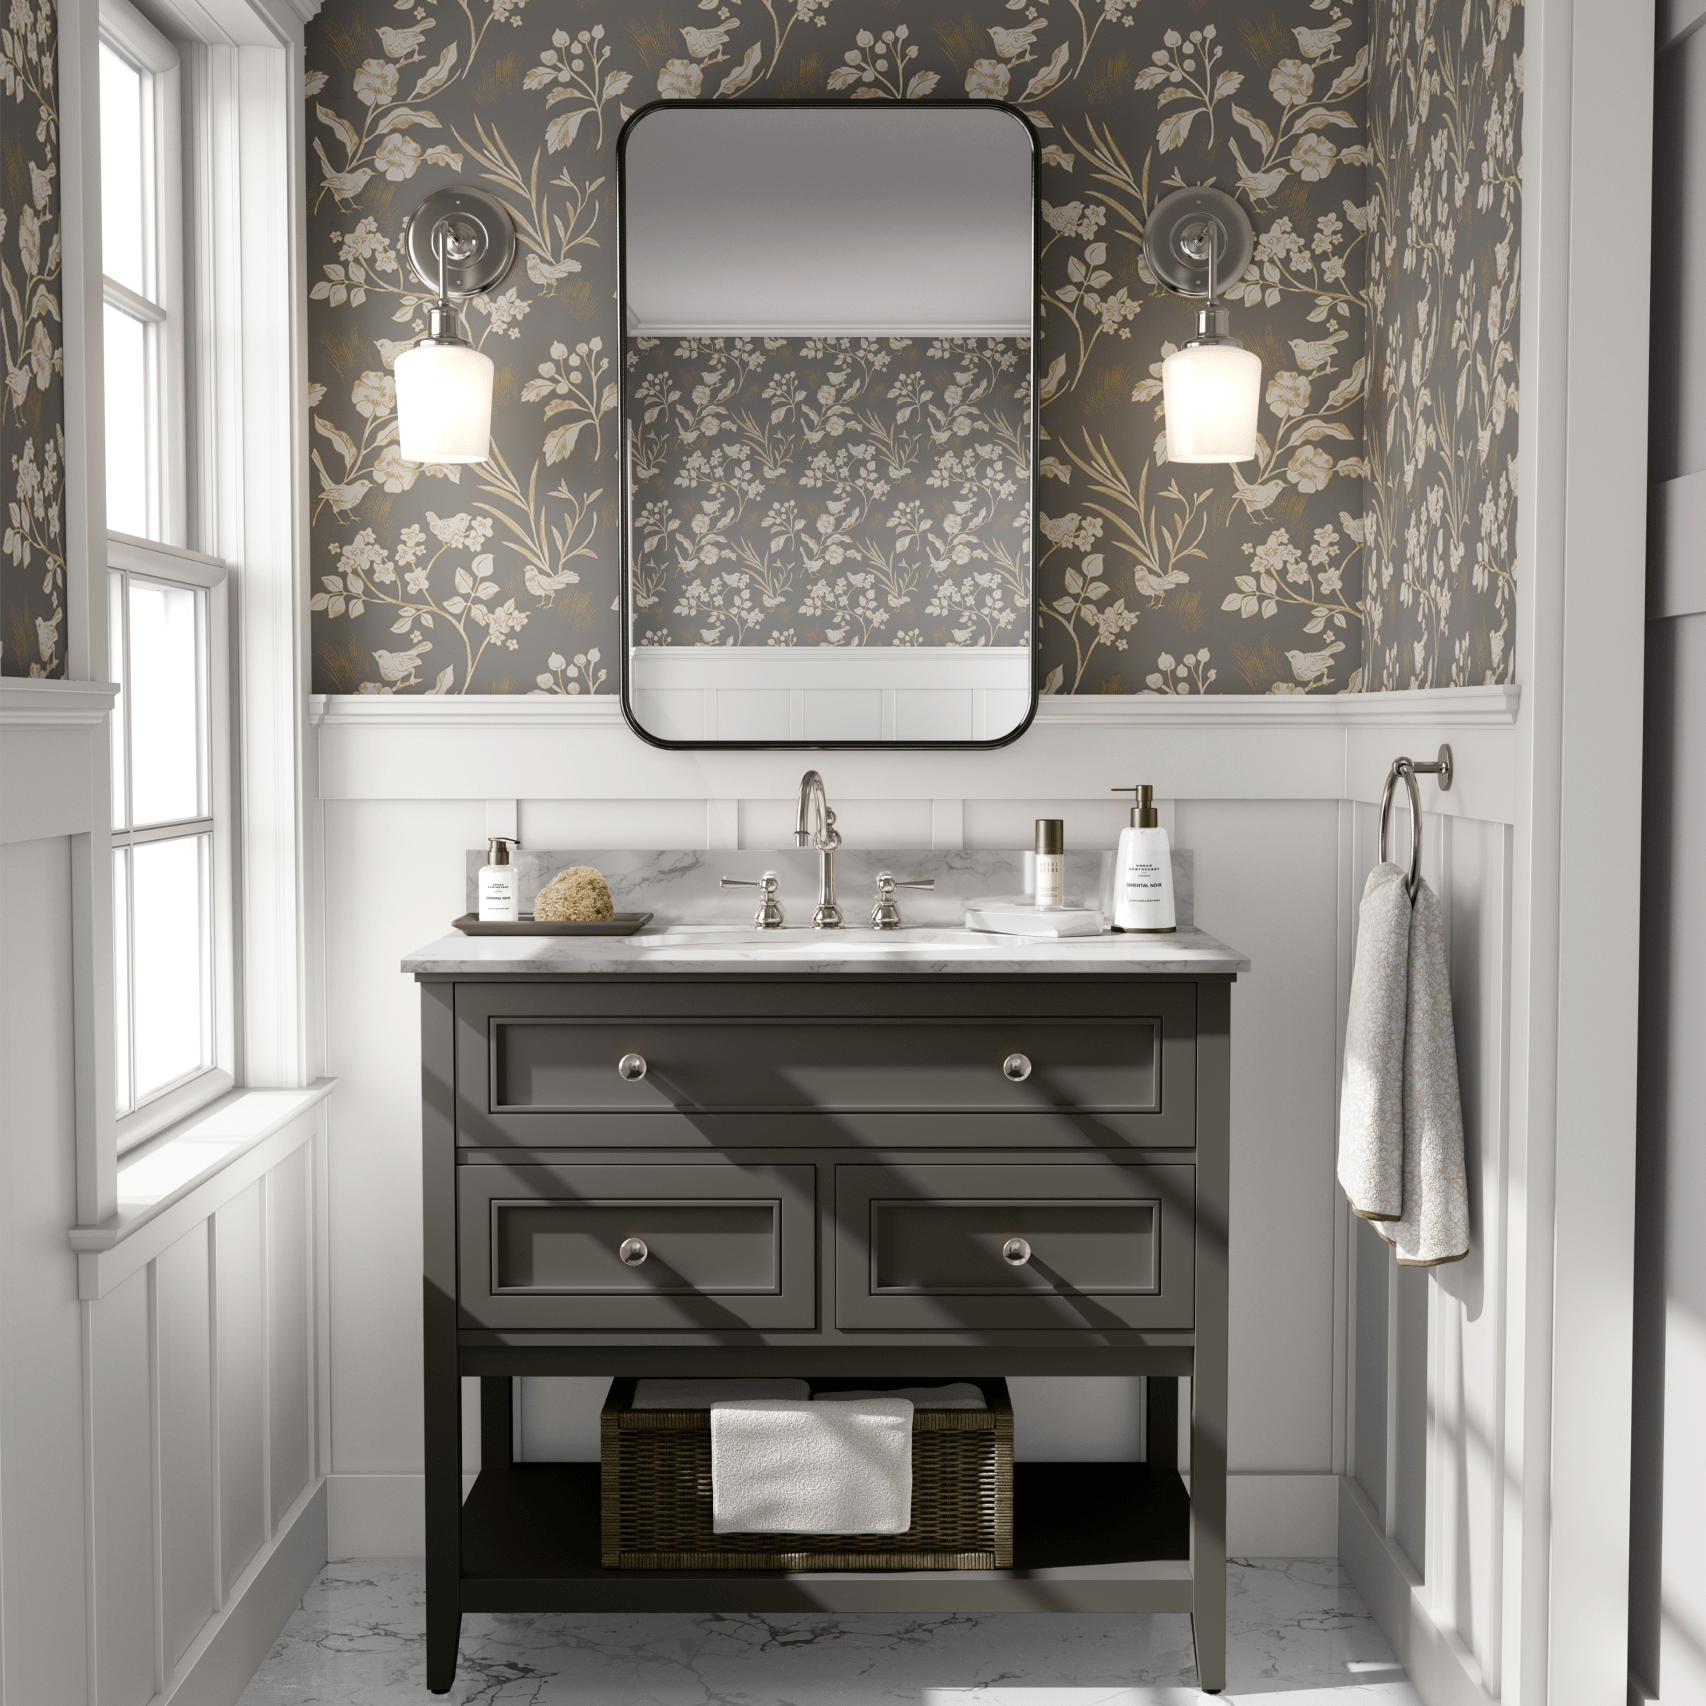 A bathroom with dark floral peel and stick wallpaper, a grey vanity. Bird wallpaper.